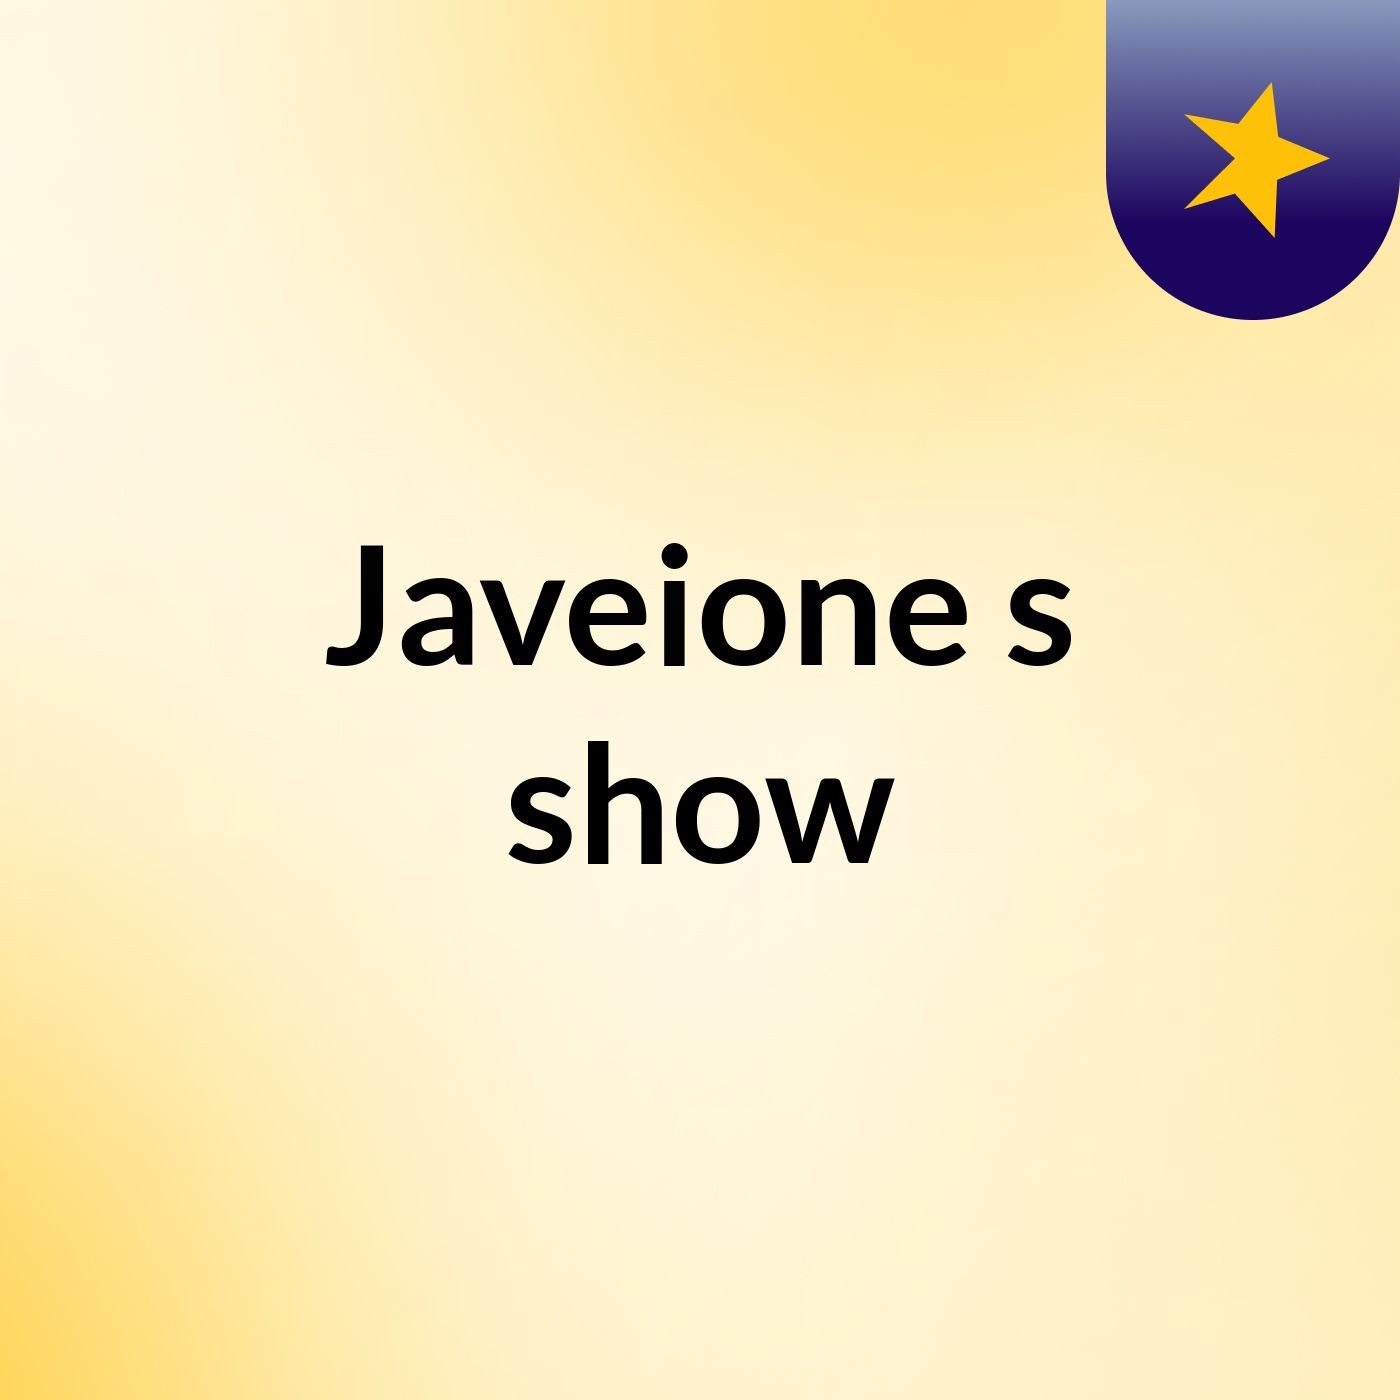 Javeione's show